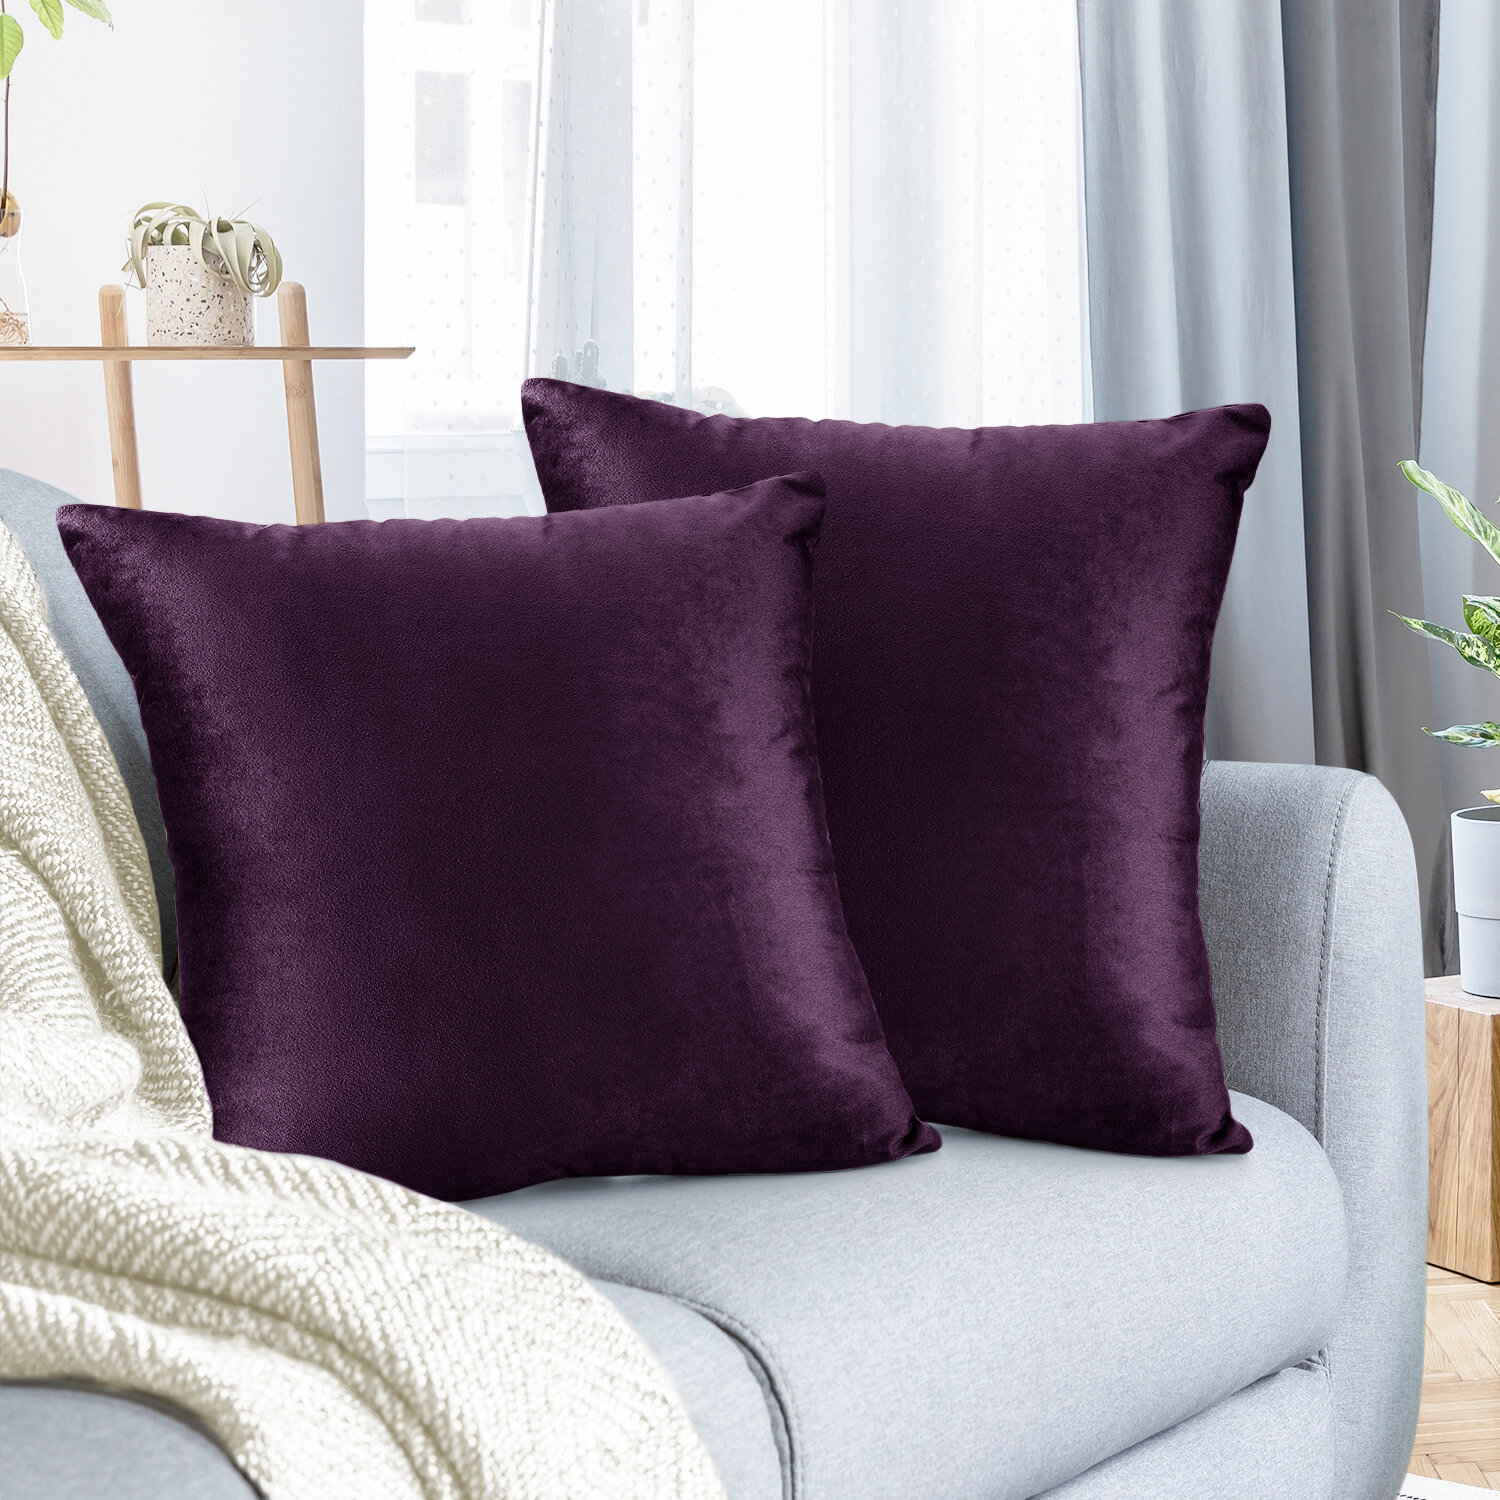 Purple Throw Pillows You'll Love in 